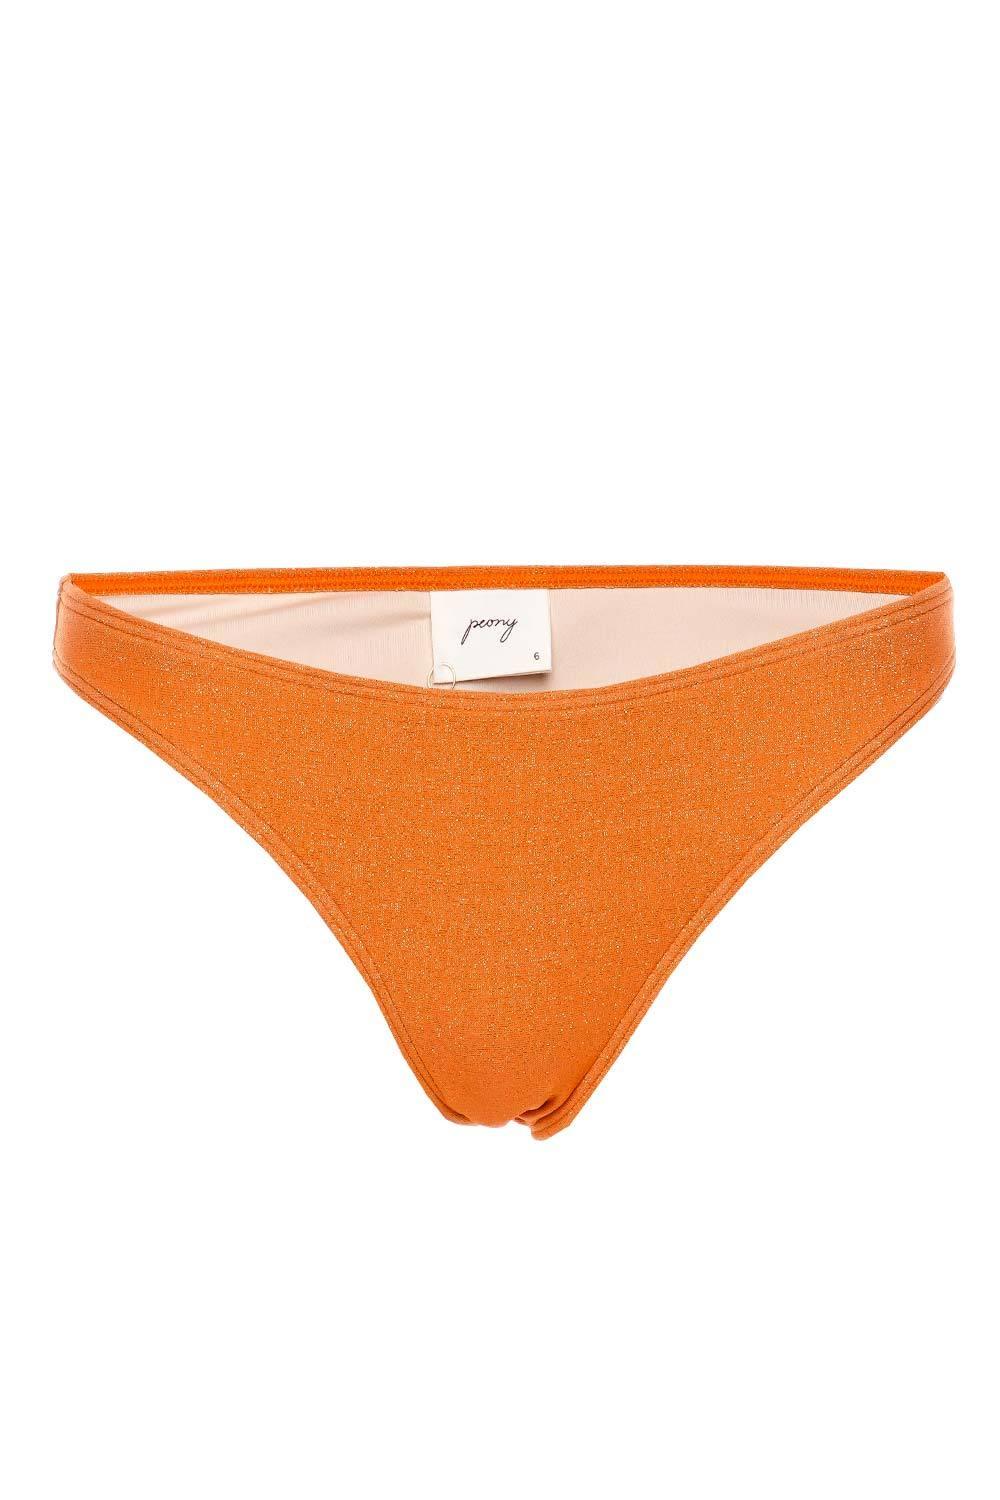 Peony Staple Bikini Bottoms in Clementine (Orange) | Lyst